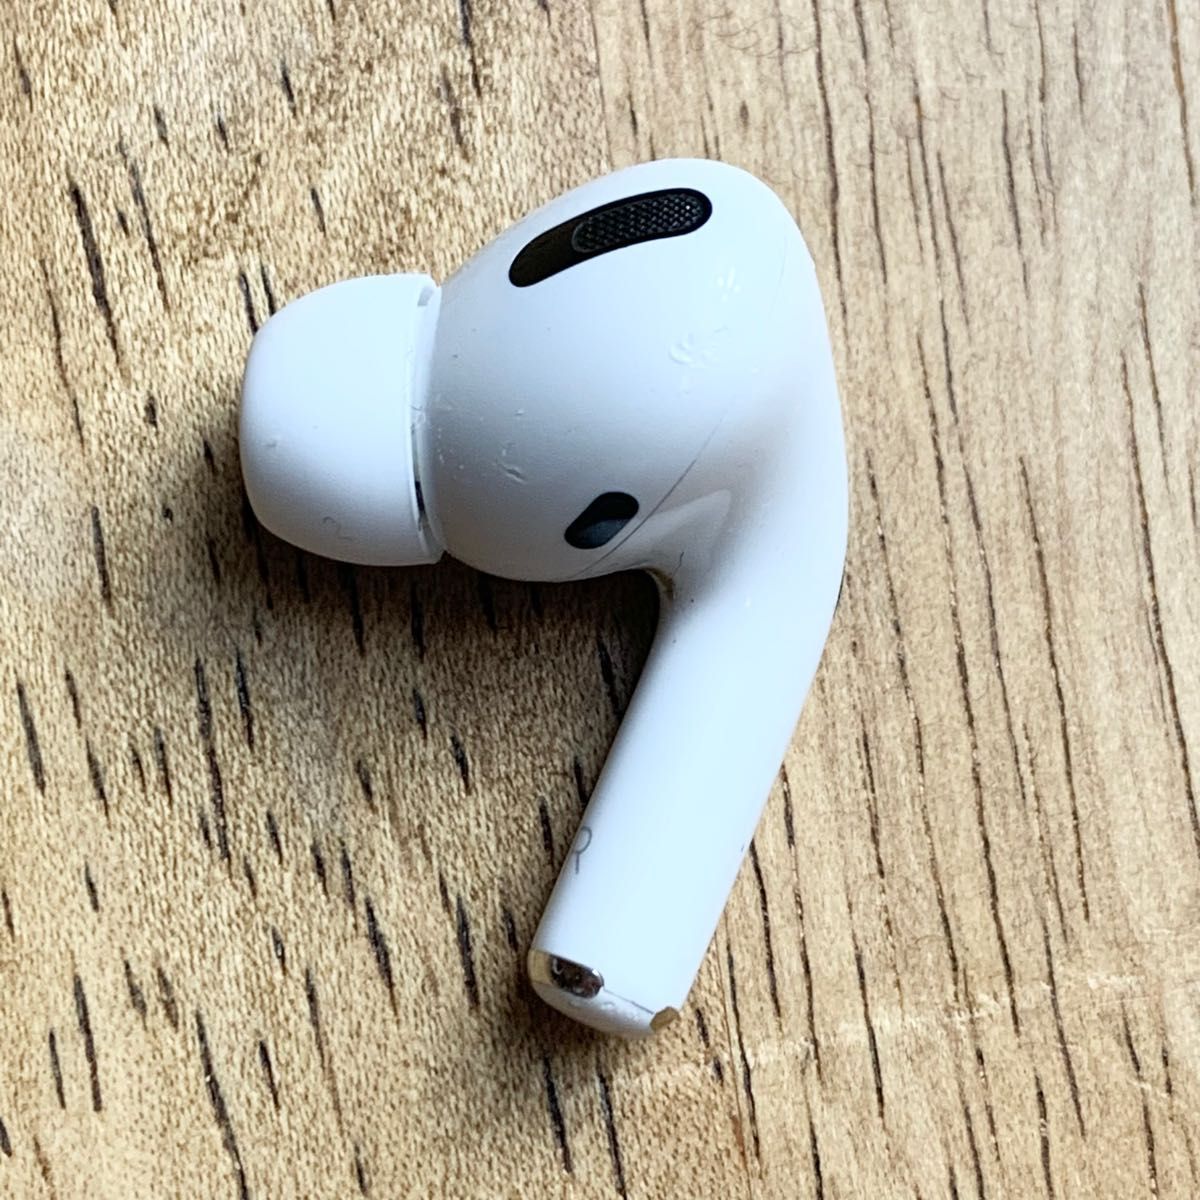 Apple純正品 新品 AirPods Pro 第一世代 右耳のみ エアーポッズプロ 